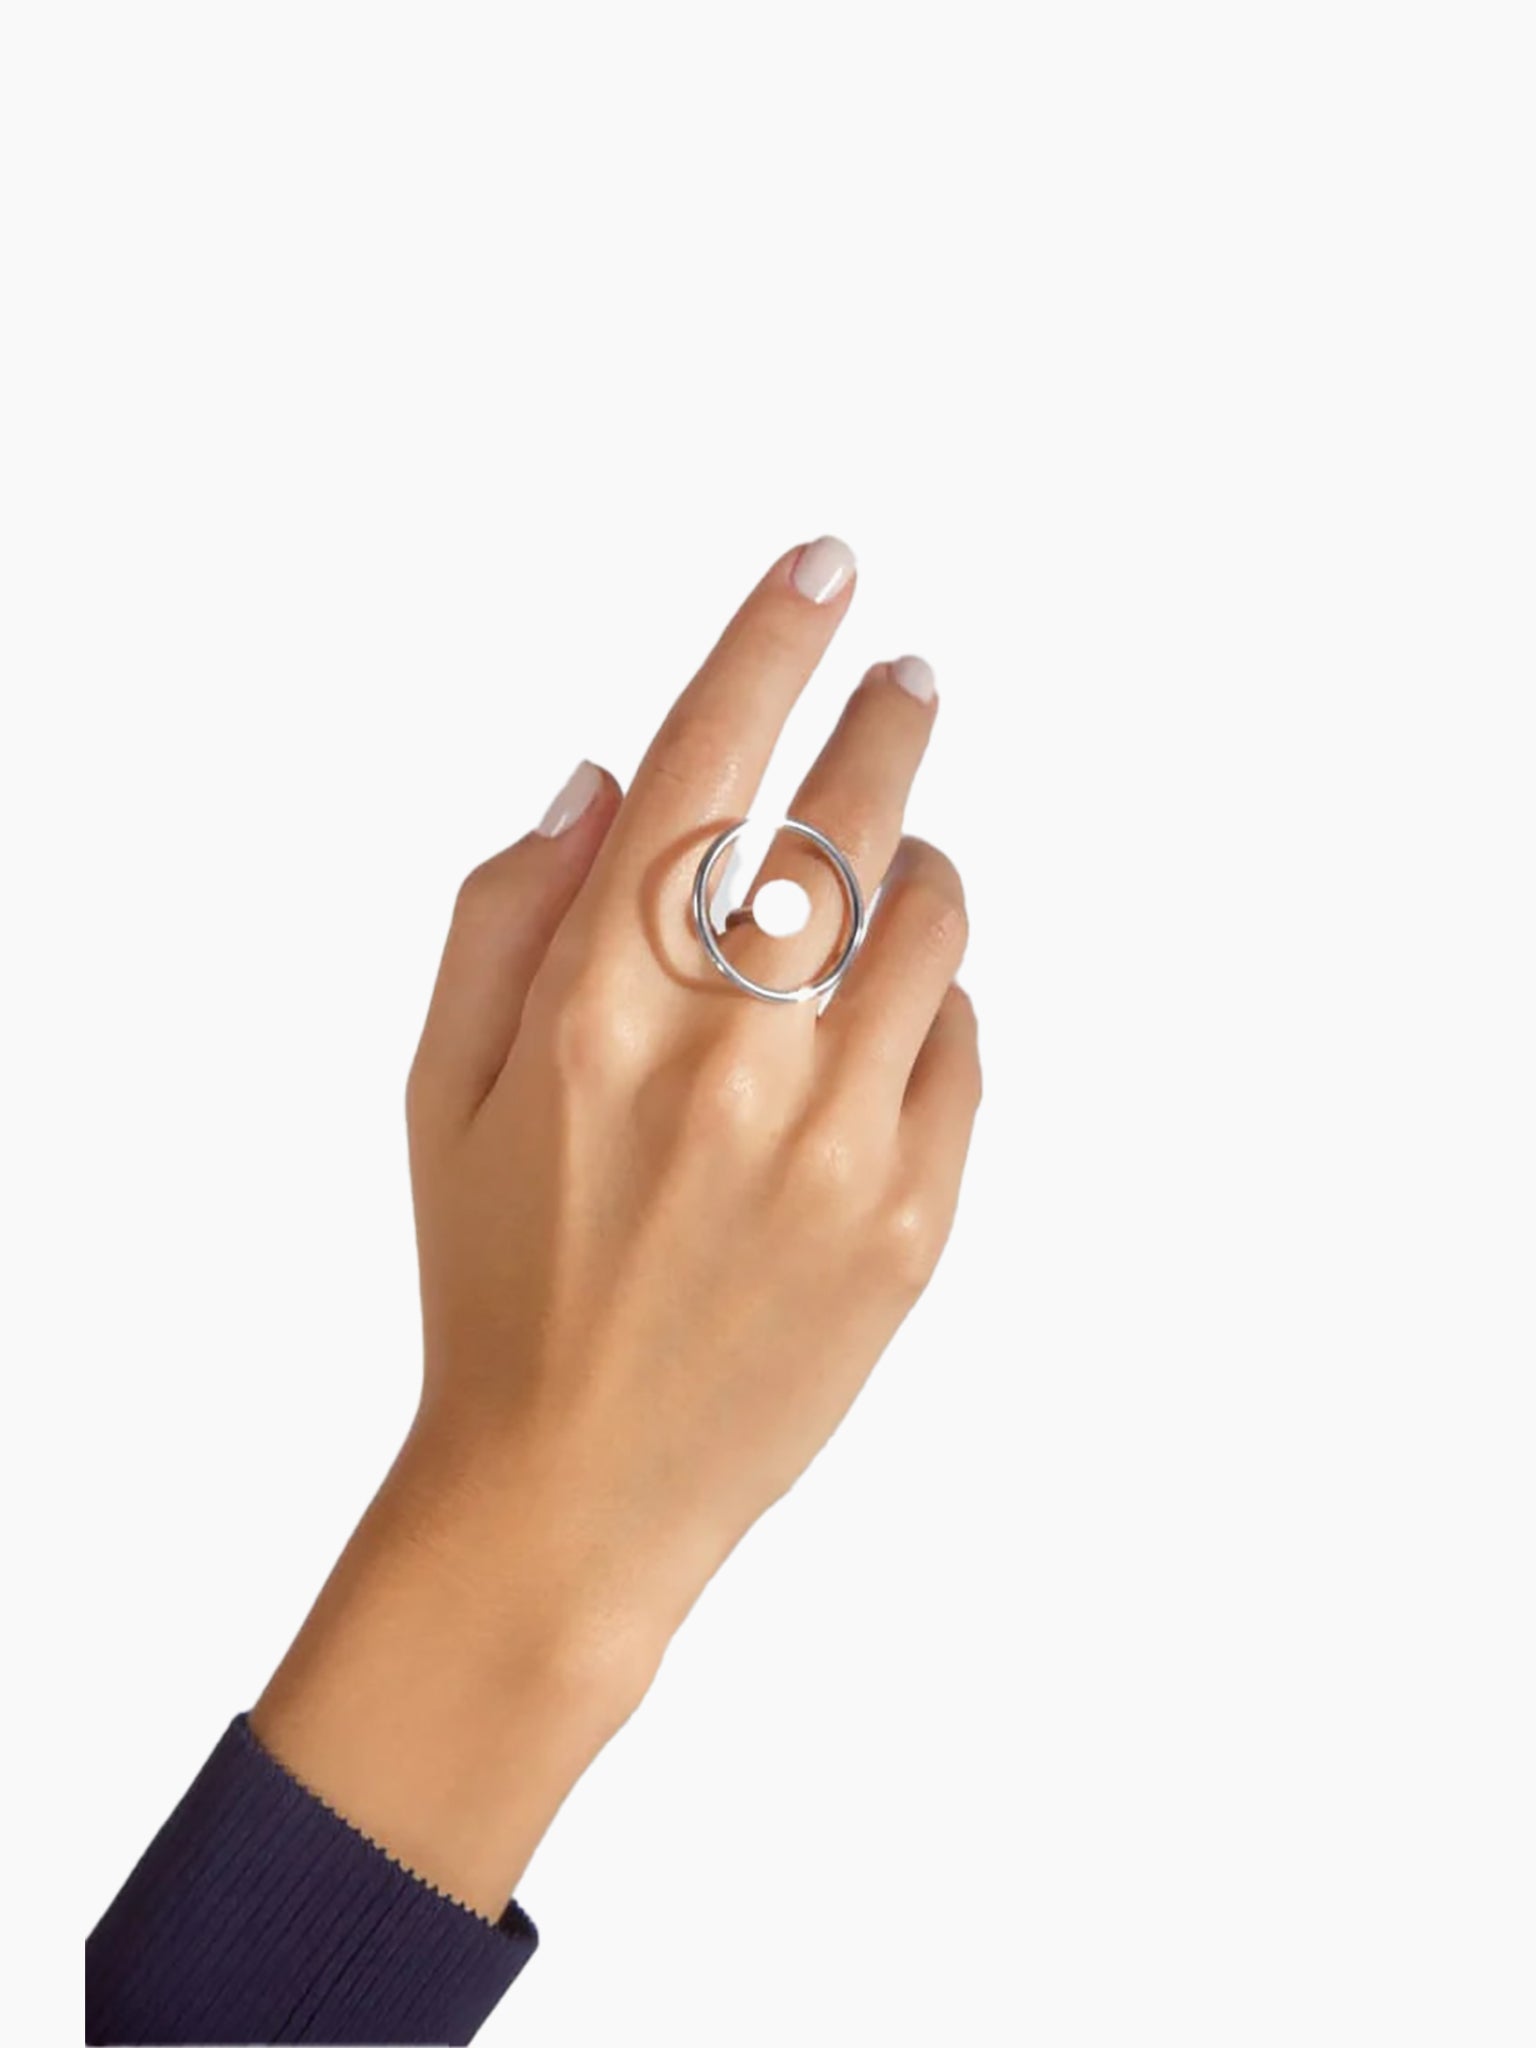 MAM Circular Silver Ring with White Quartz